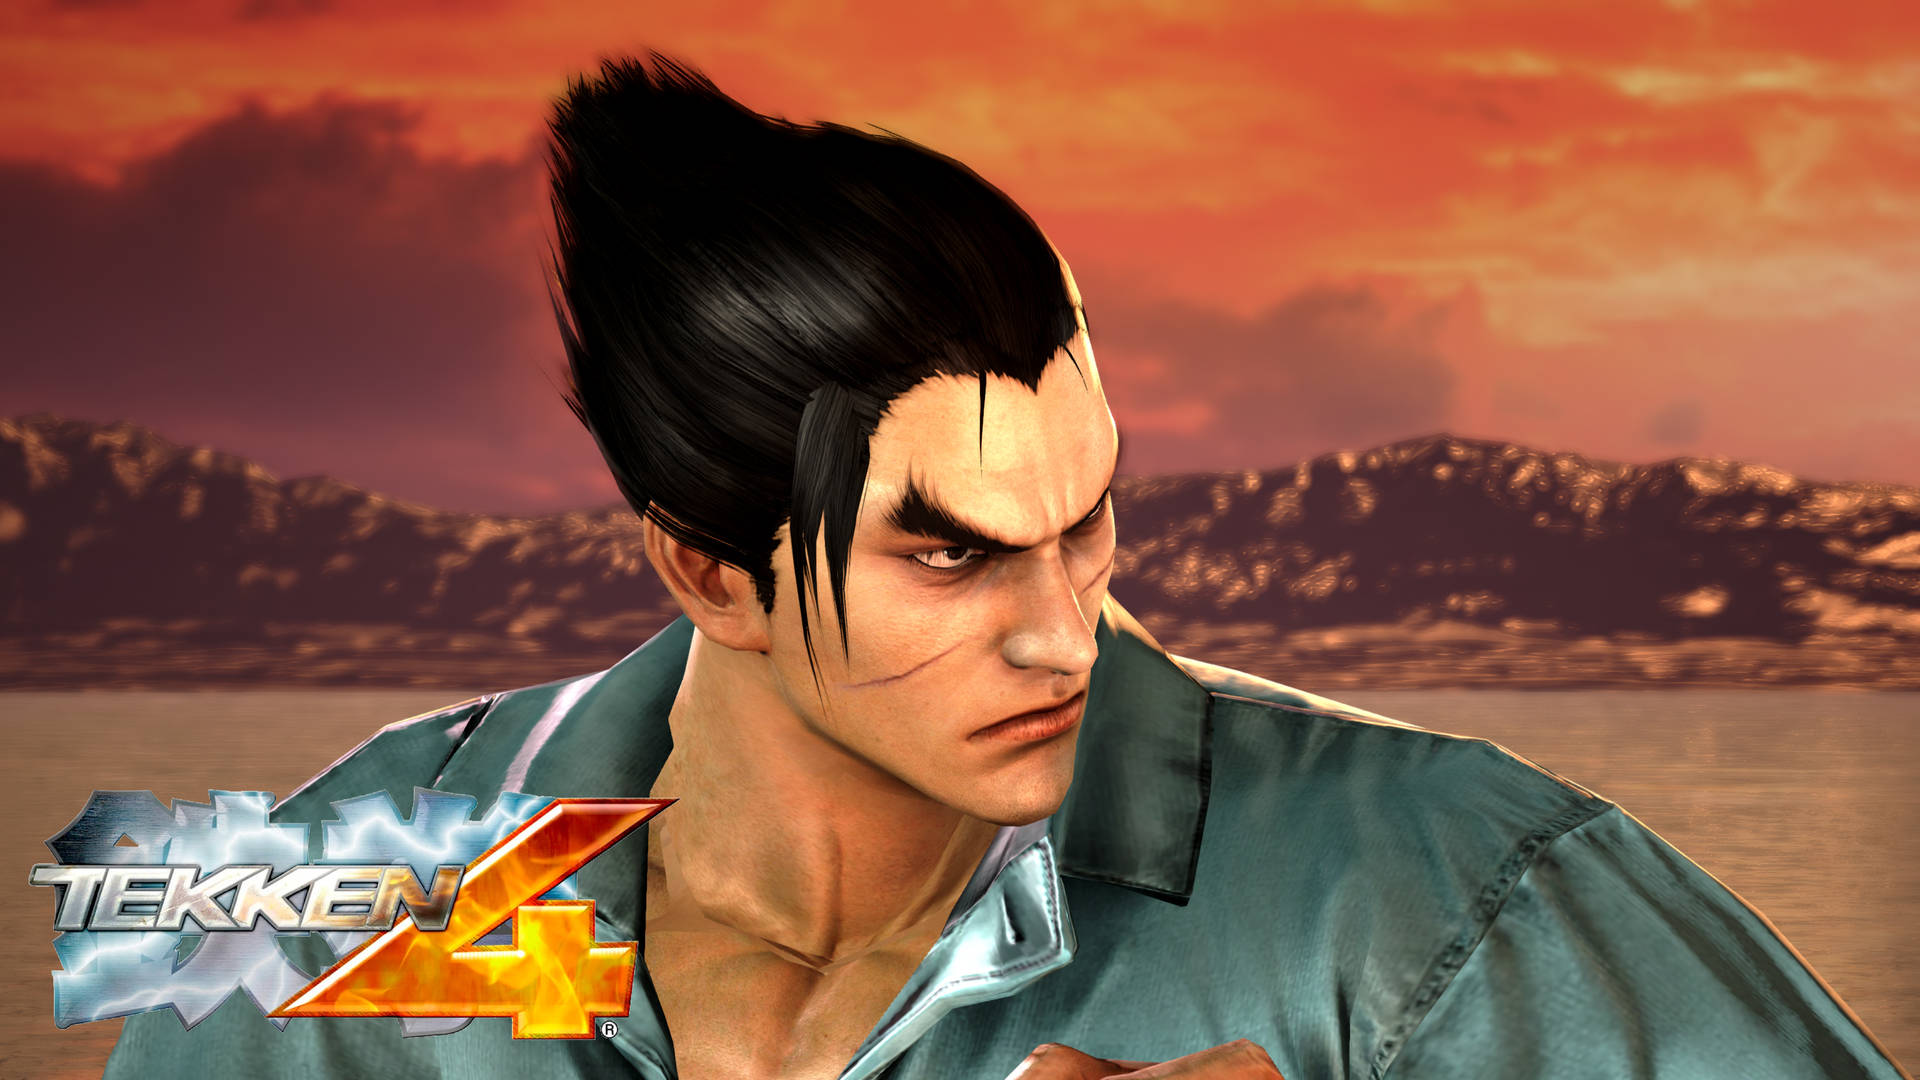 Tekken4 Capa De Kazuya Mishima. Papel de Parede